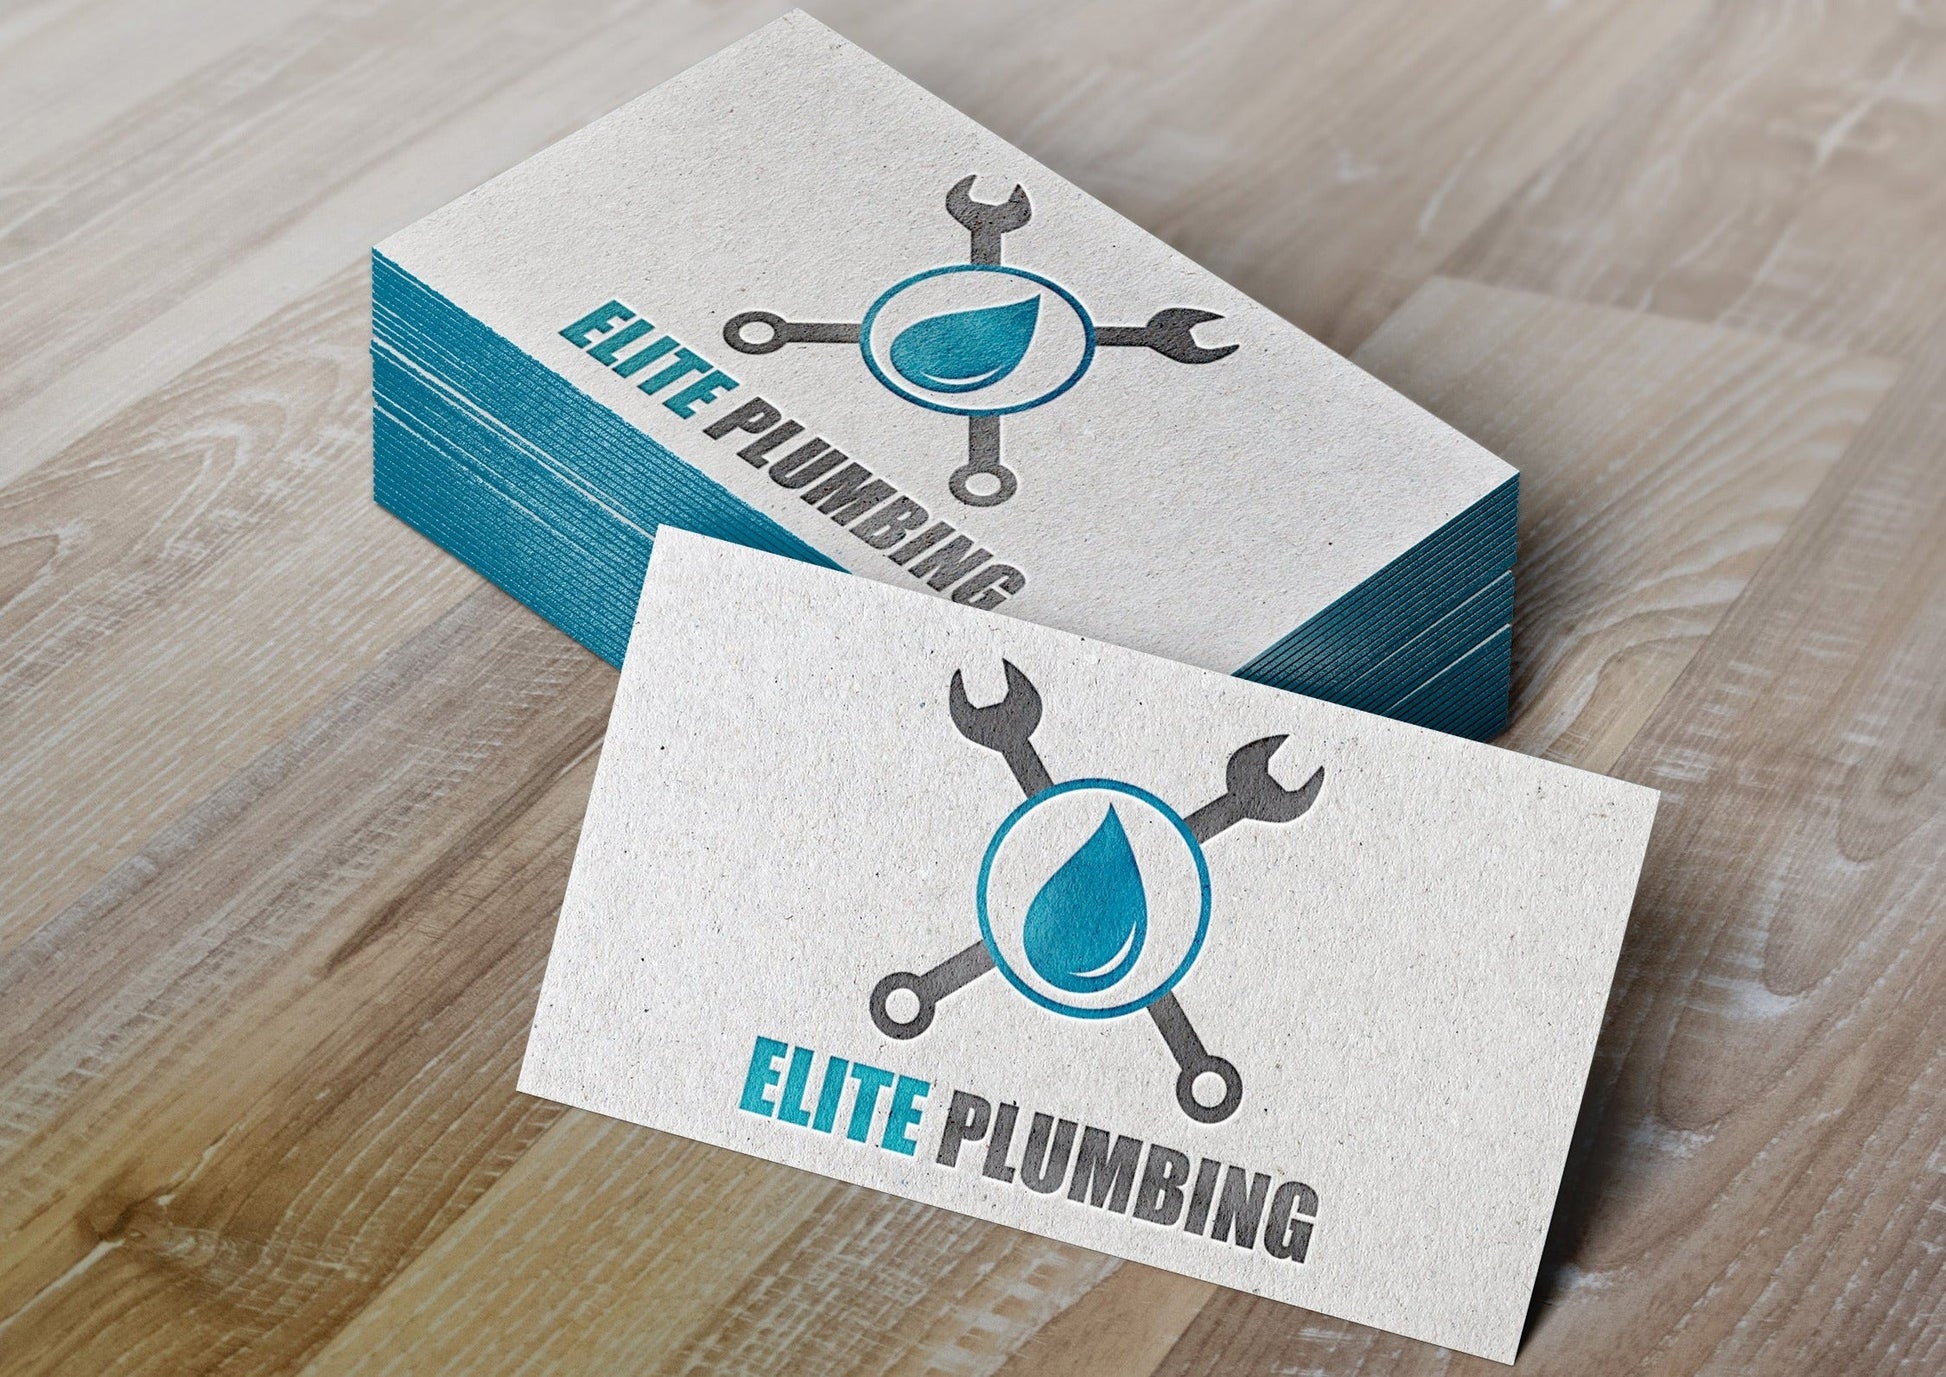 Plumber Logo Design | Plumbing Services | Plumber | Home Repair | Plumbing Business | Plumbing Company | Logo Design